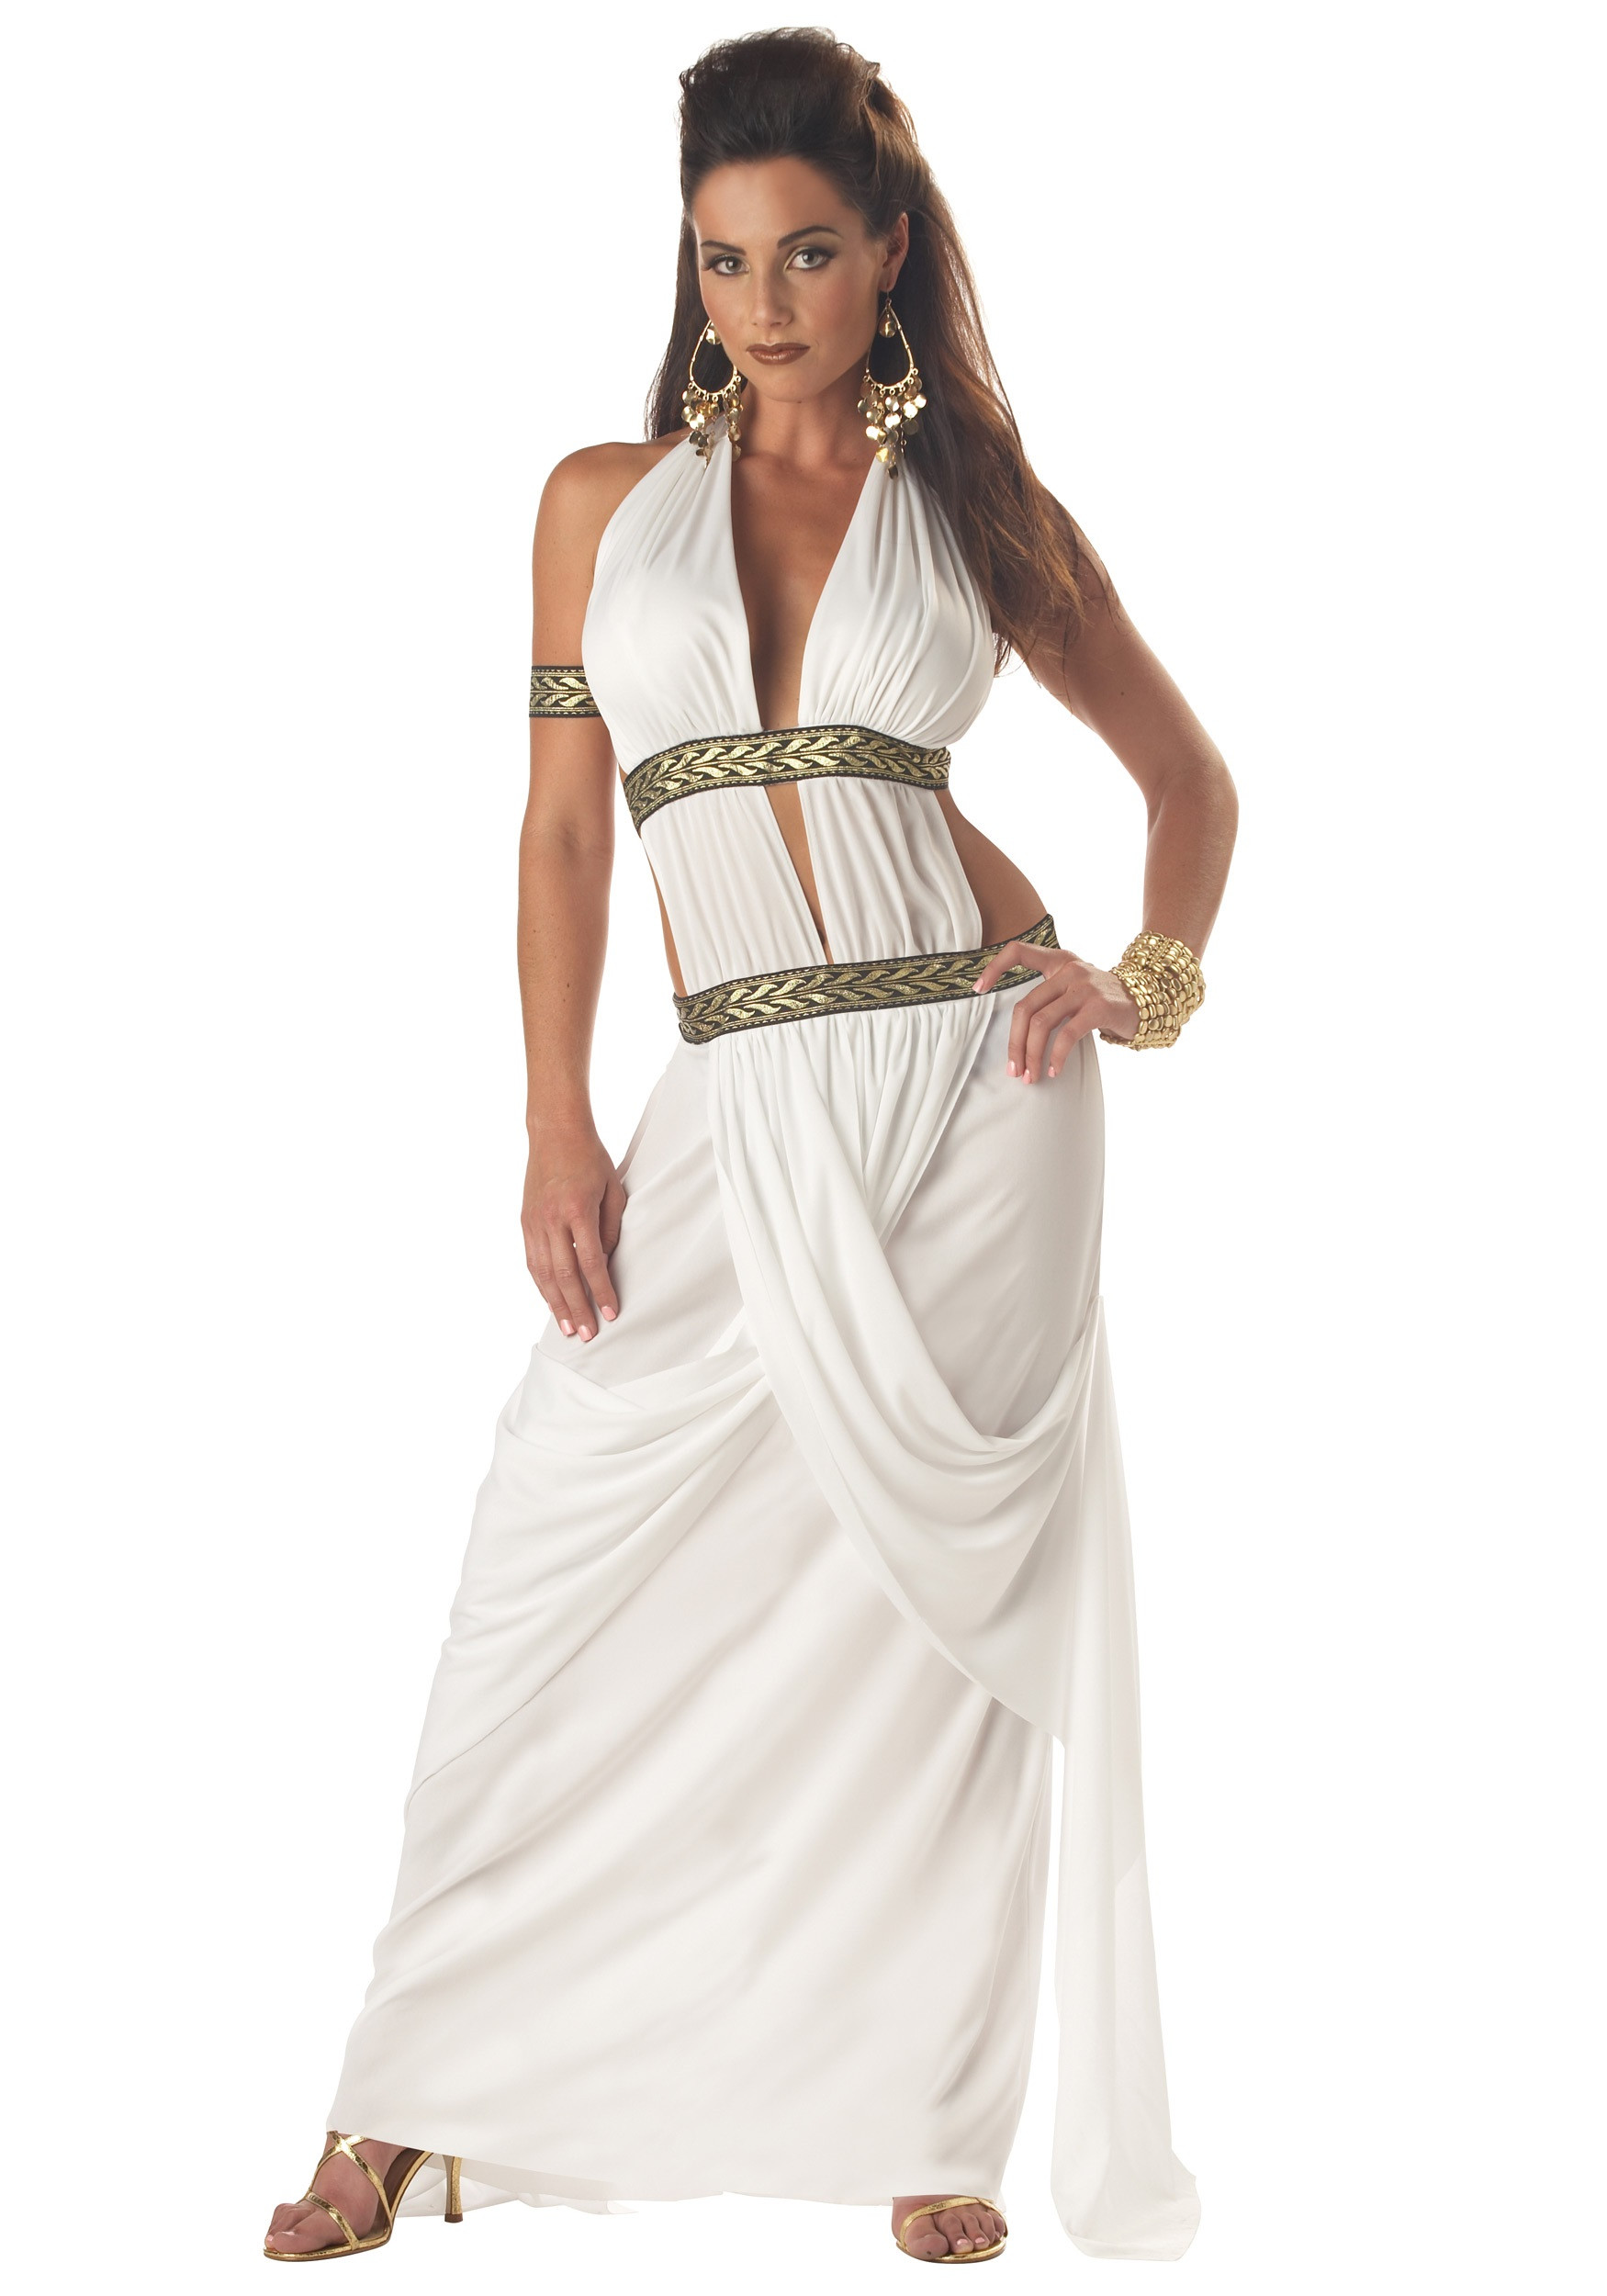 Greek Goddess Costume DIY
 Spartan Queen Costume